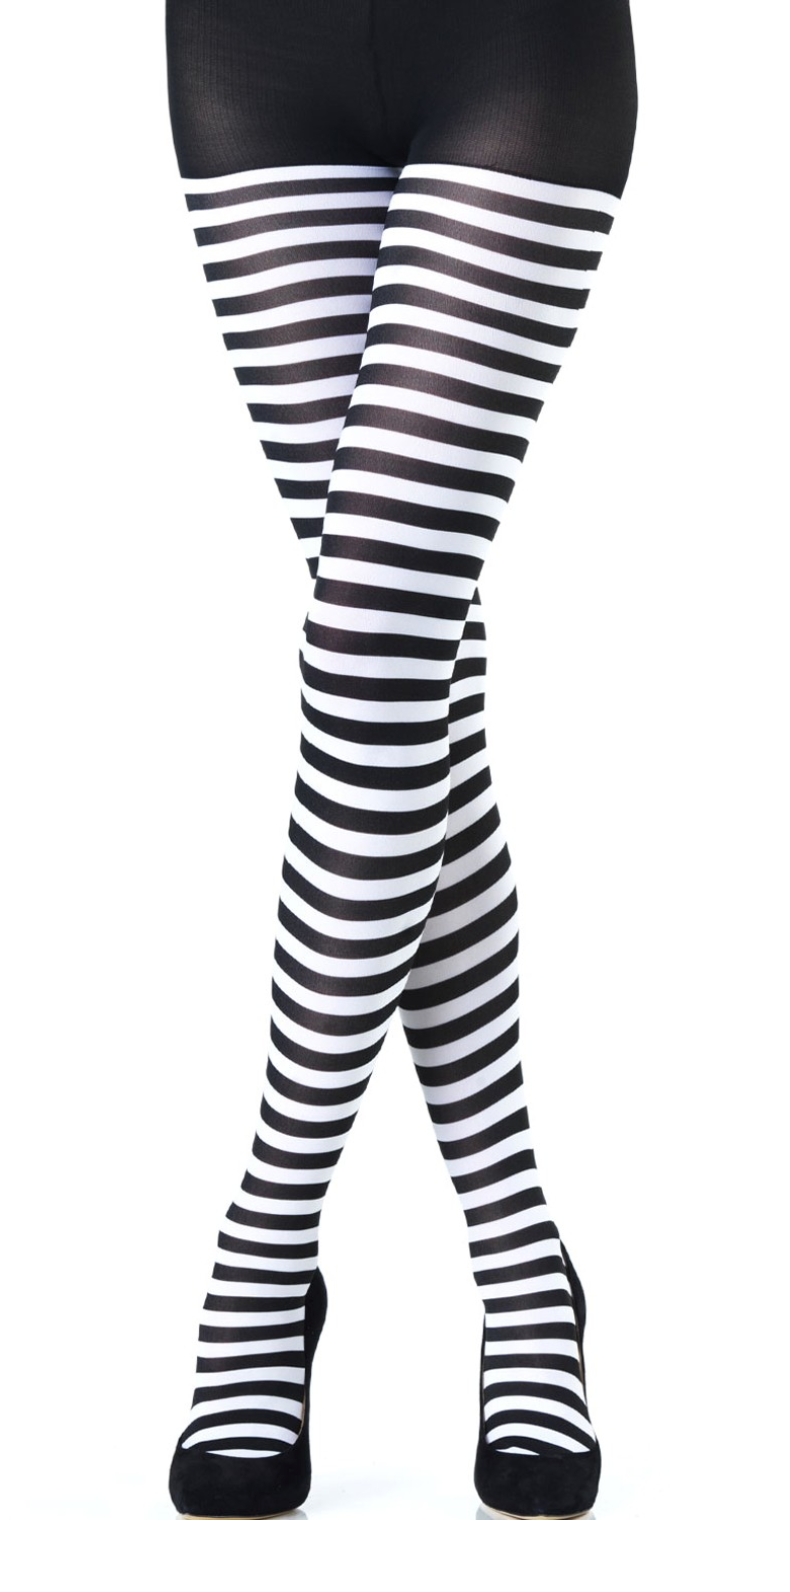 Emilio Cavallini Two Toned Horizontal Stripes Tights - black and white striped tights